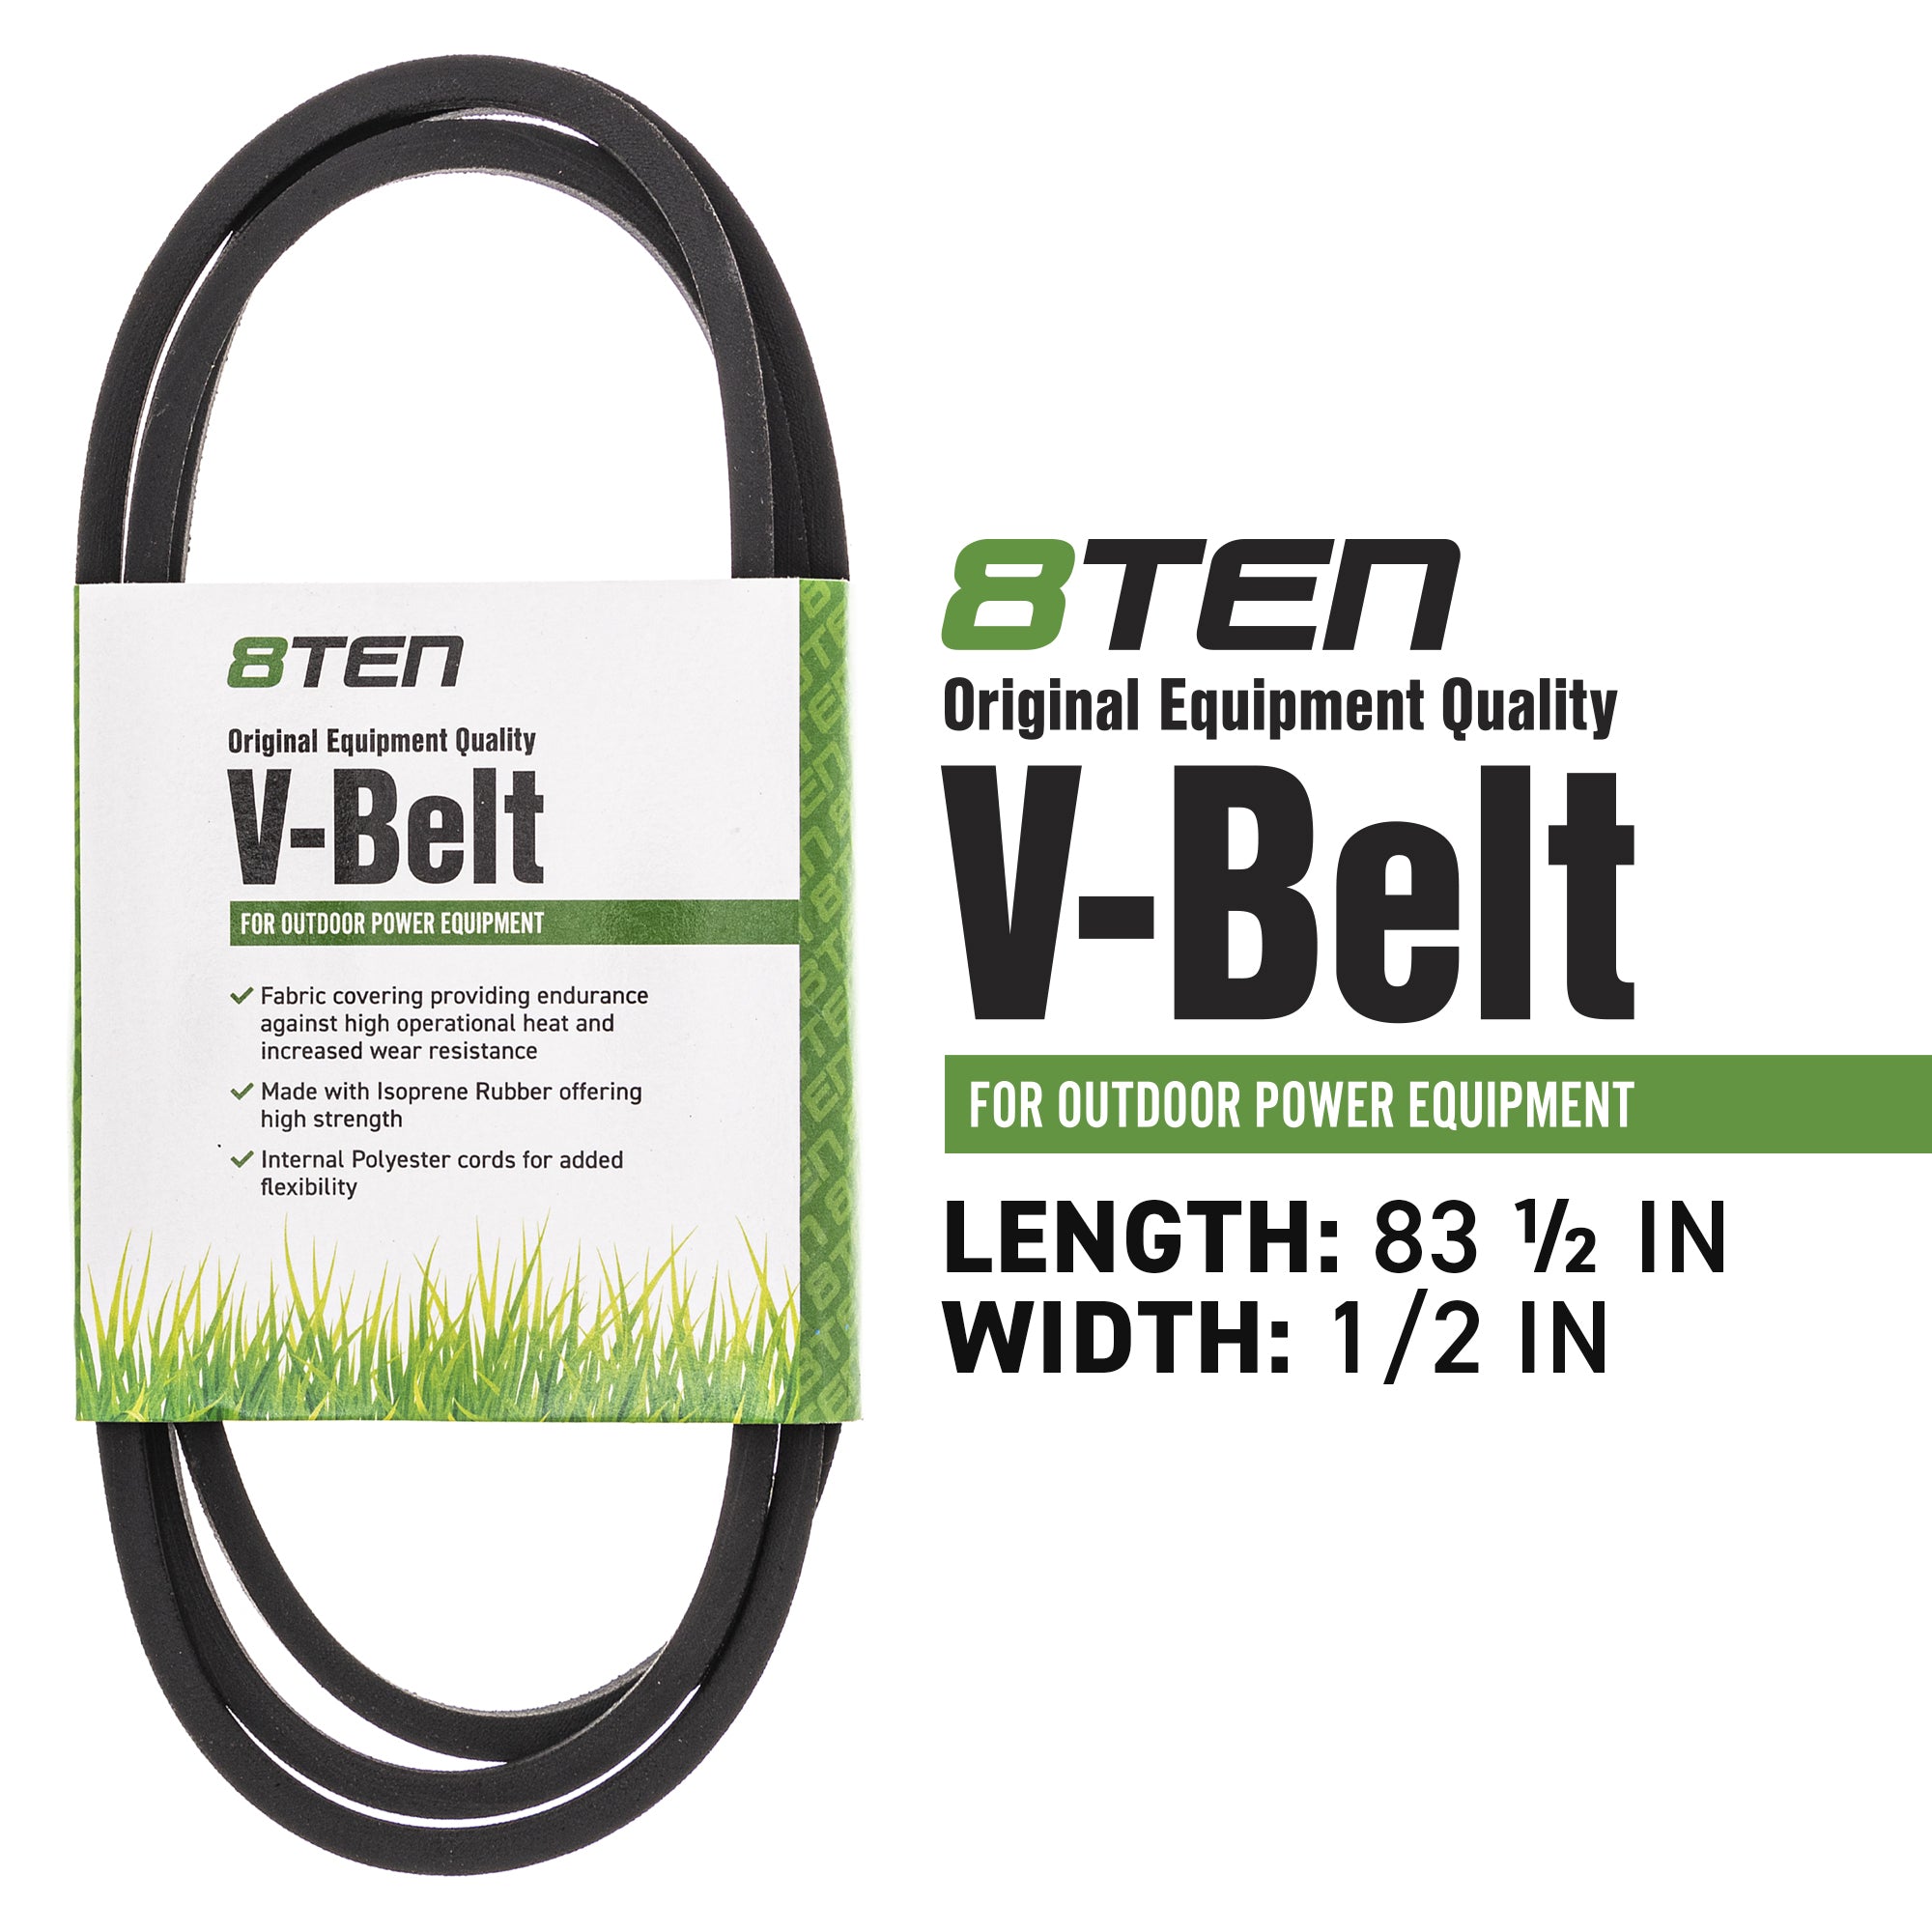 8TEN MK1006325 Clutch Belt Kit for Xtreme Warner Stens Oregon MTD